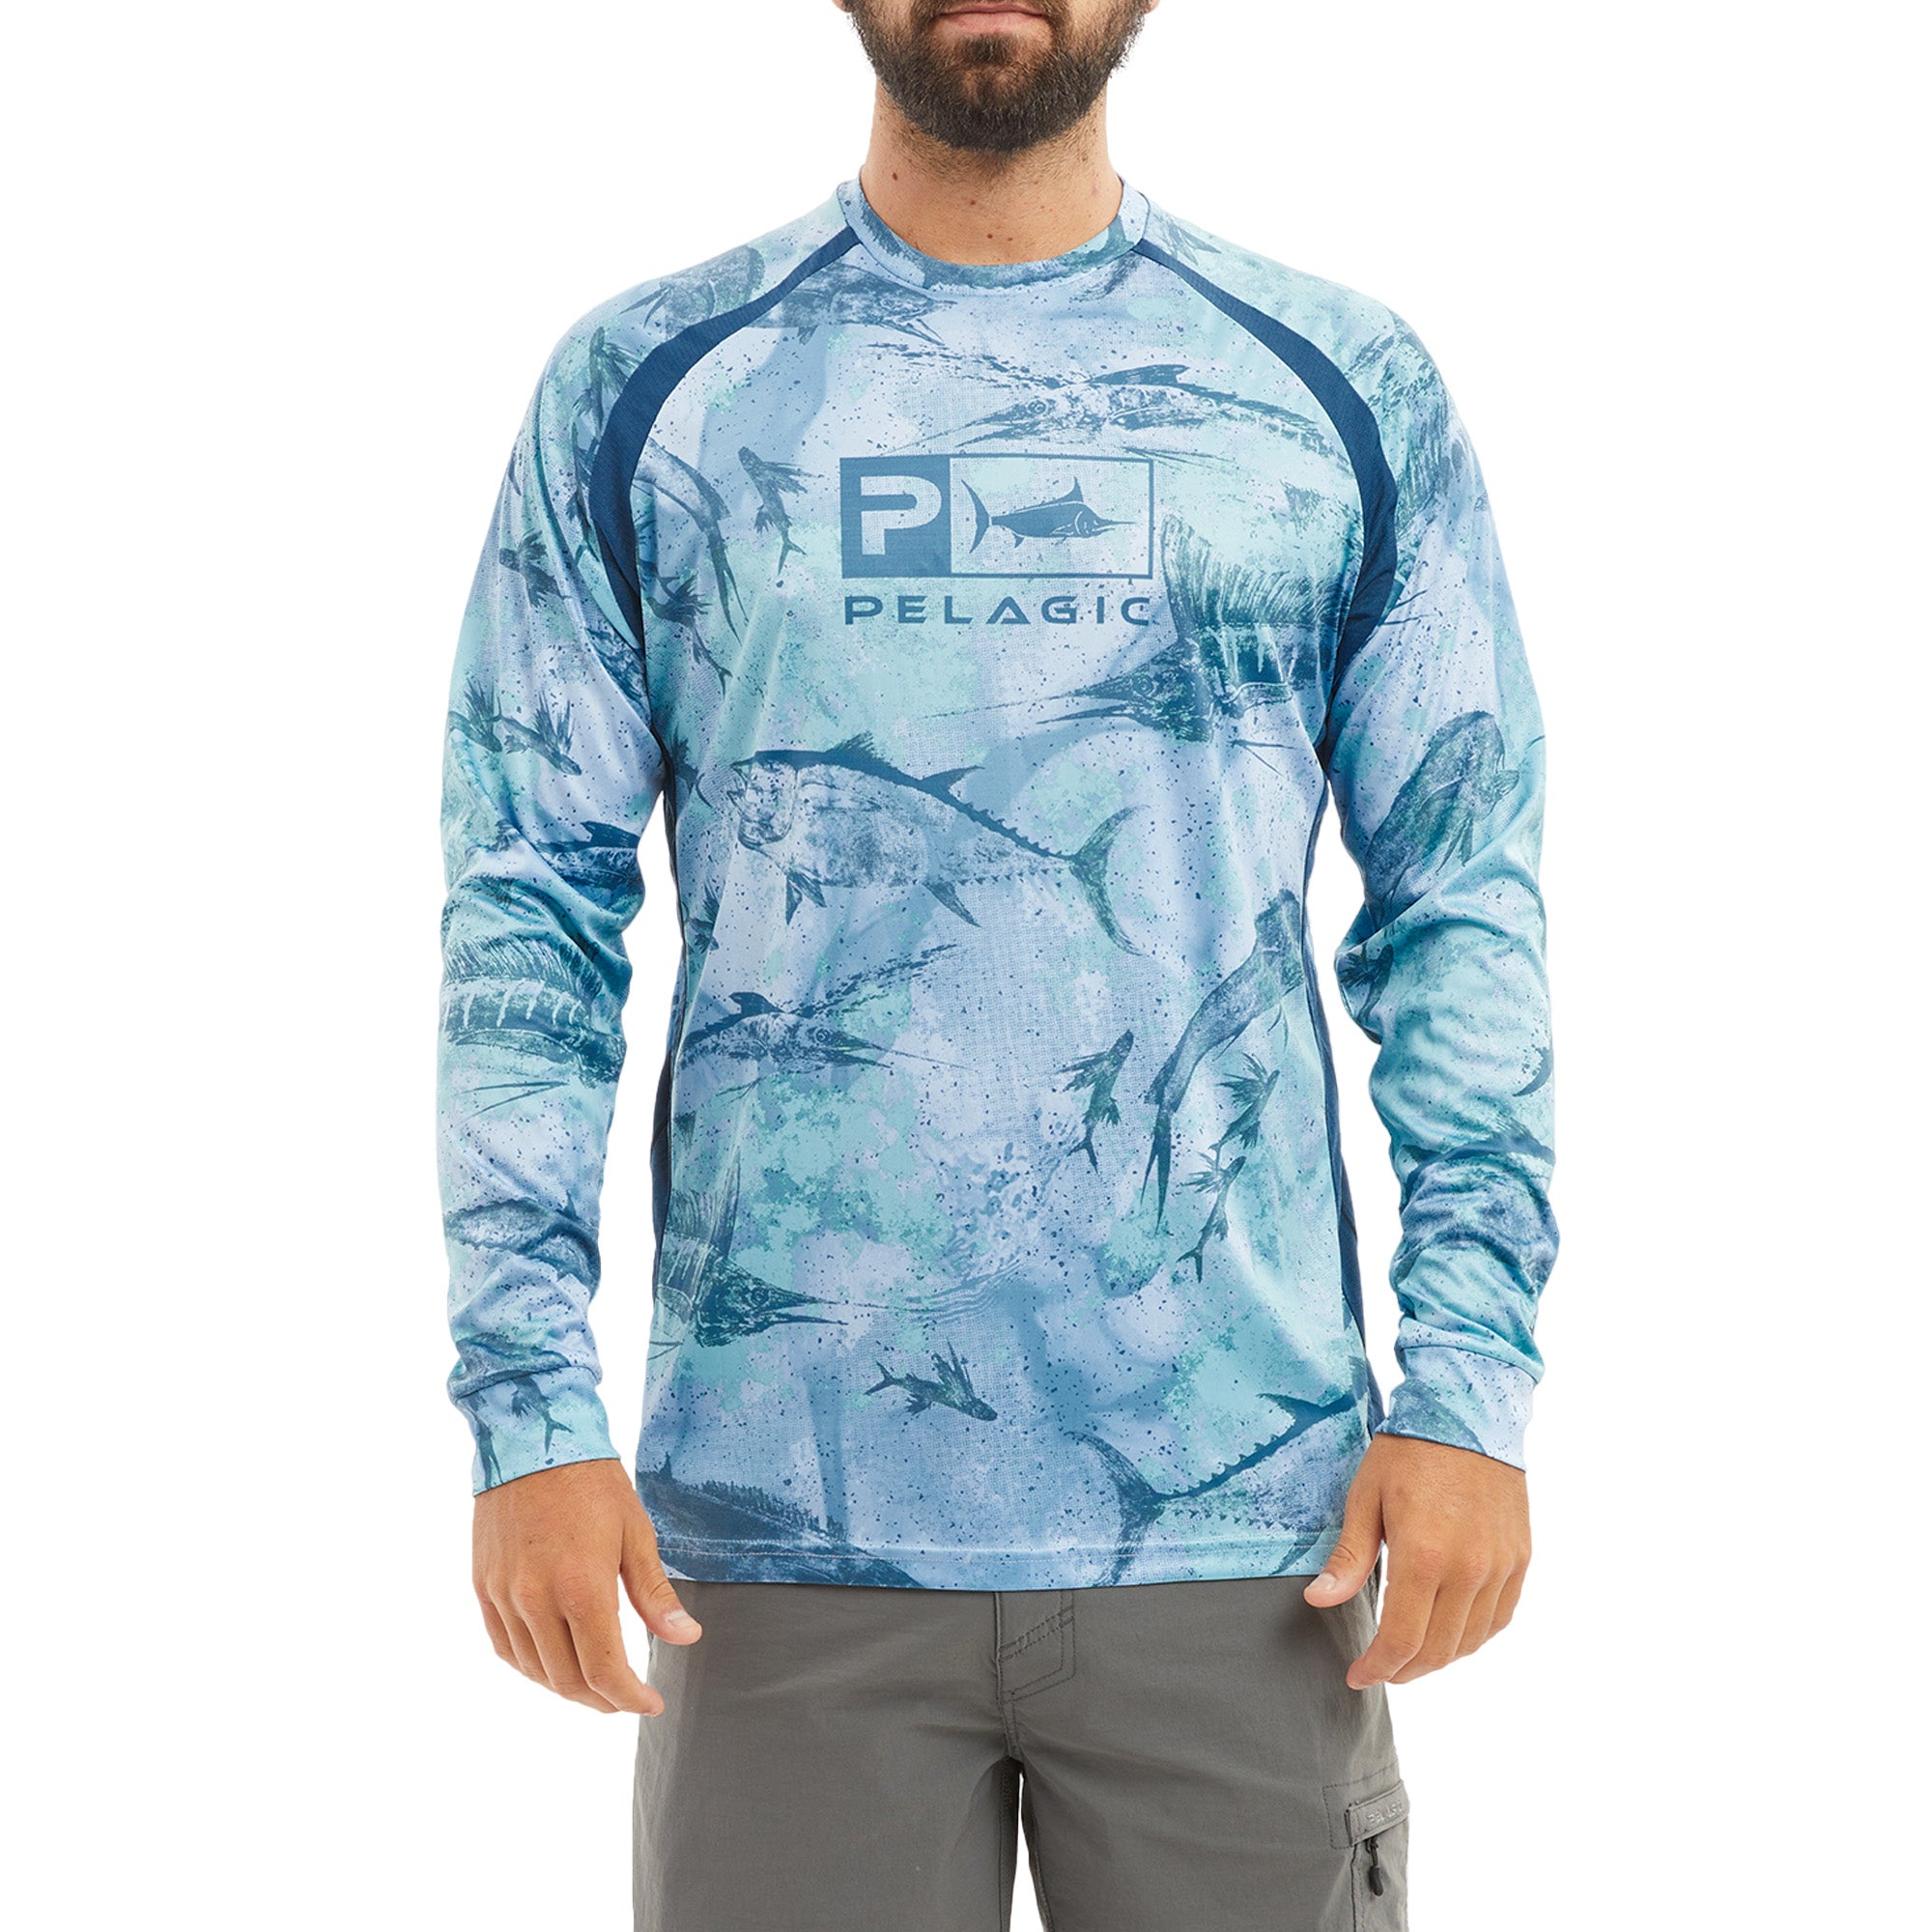 Pelagic New Fishing Shirts Long Sleeve UV Protection Sweatshirt